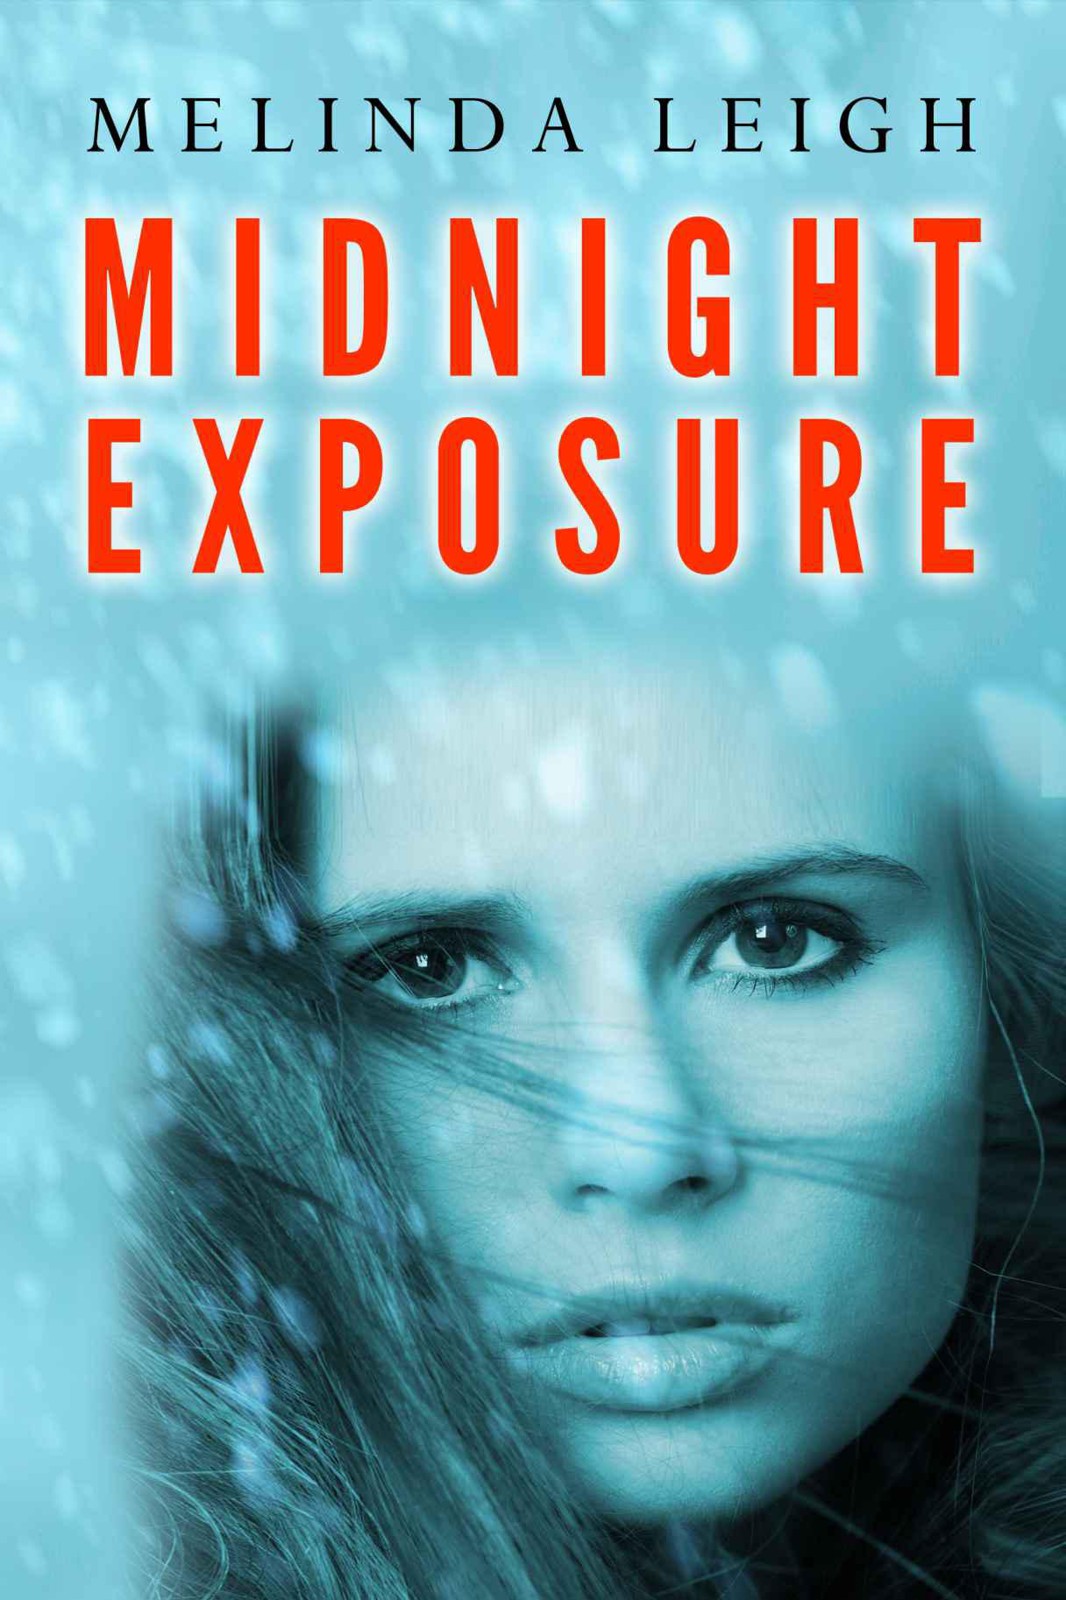 Midnight Exposure by Leigh, Melinda